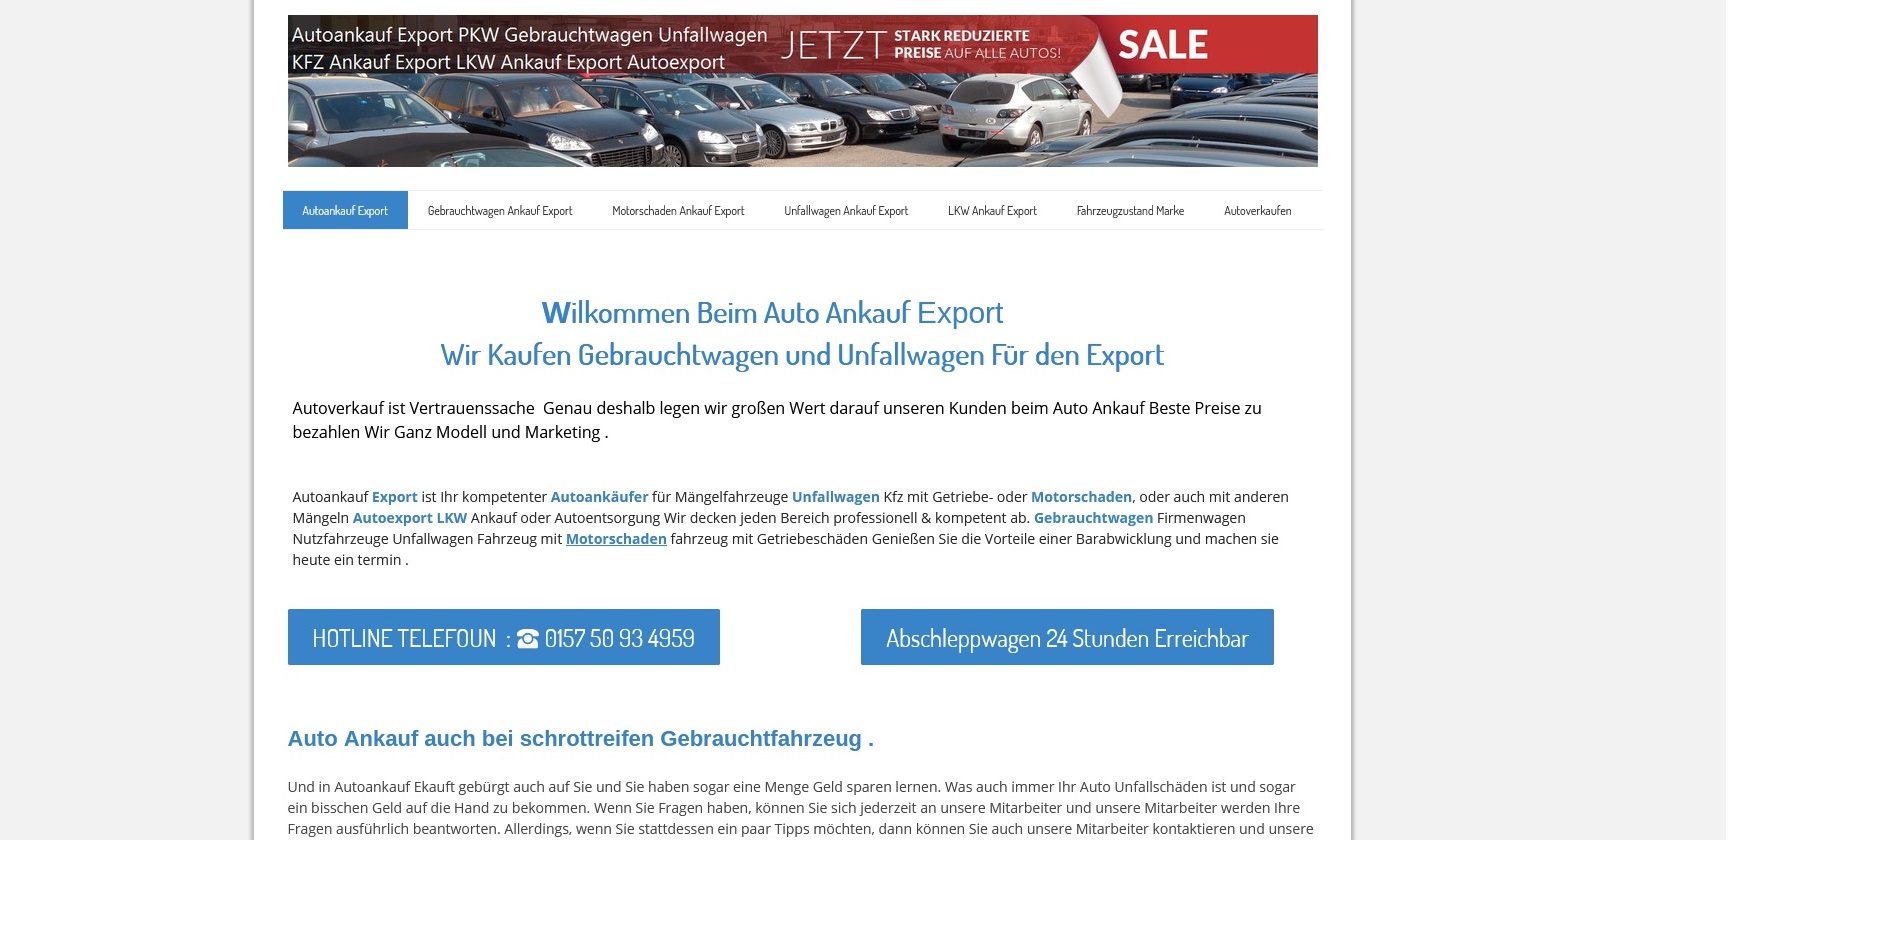 autoankauf ingolstadt kfz ankauf export kauft jeden gebrauchtwagen an - Autoankauf Ingolstadt | Kfz-Ankauf-export kauft jeden Gebrauchtwagen an!